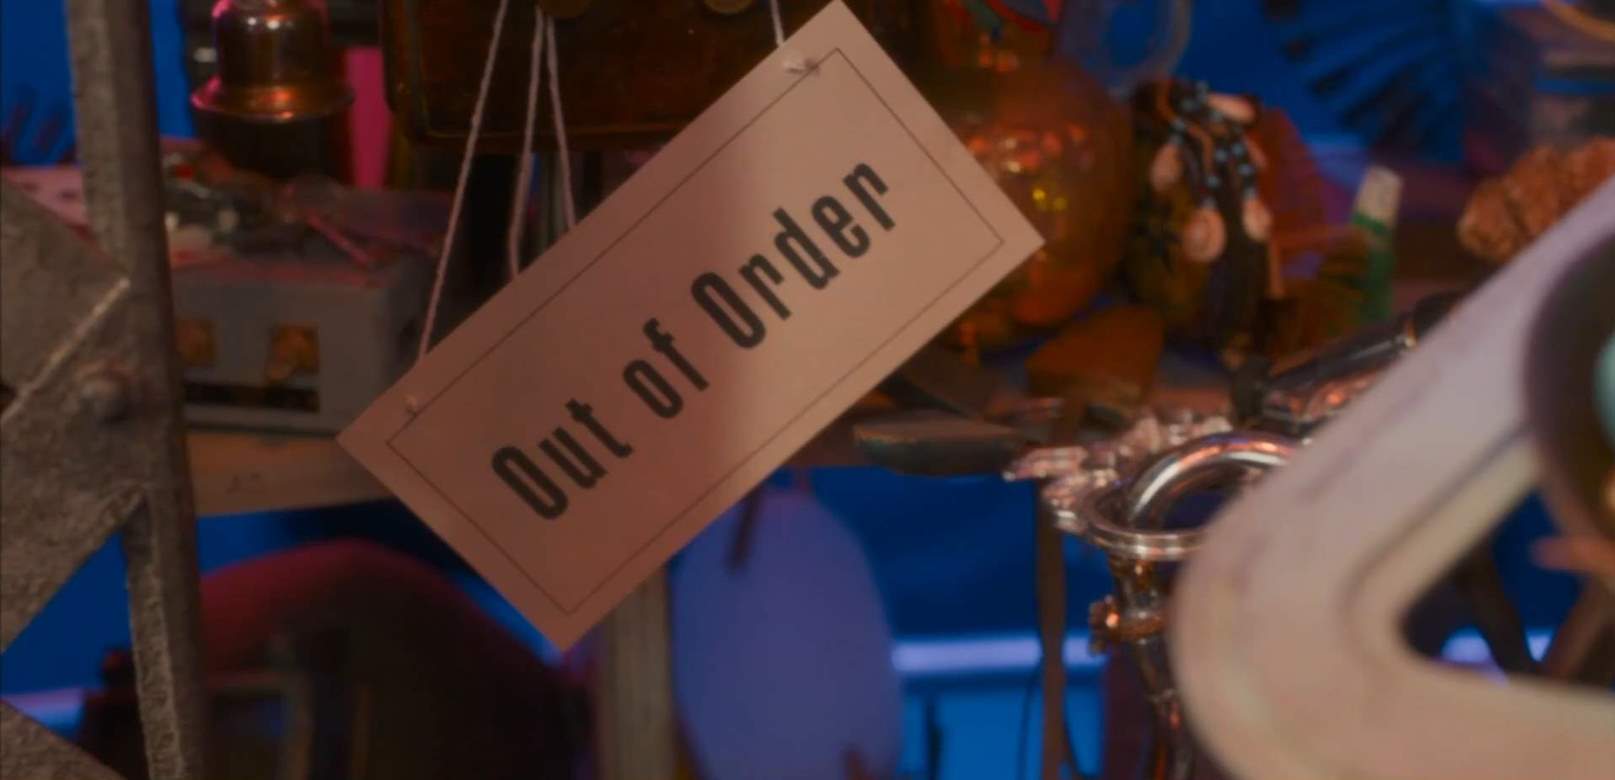 The Doctor’s “Out of Order” sign on display. (TV: The Time Meddler [+]Loading...["The Time Meddler (TotT TV story)"])